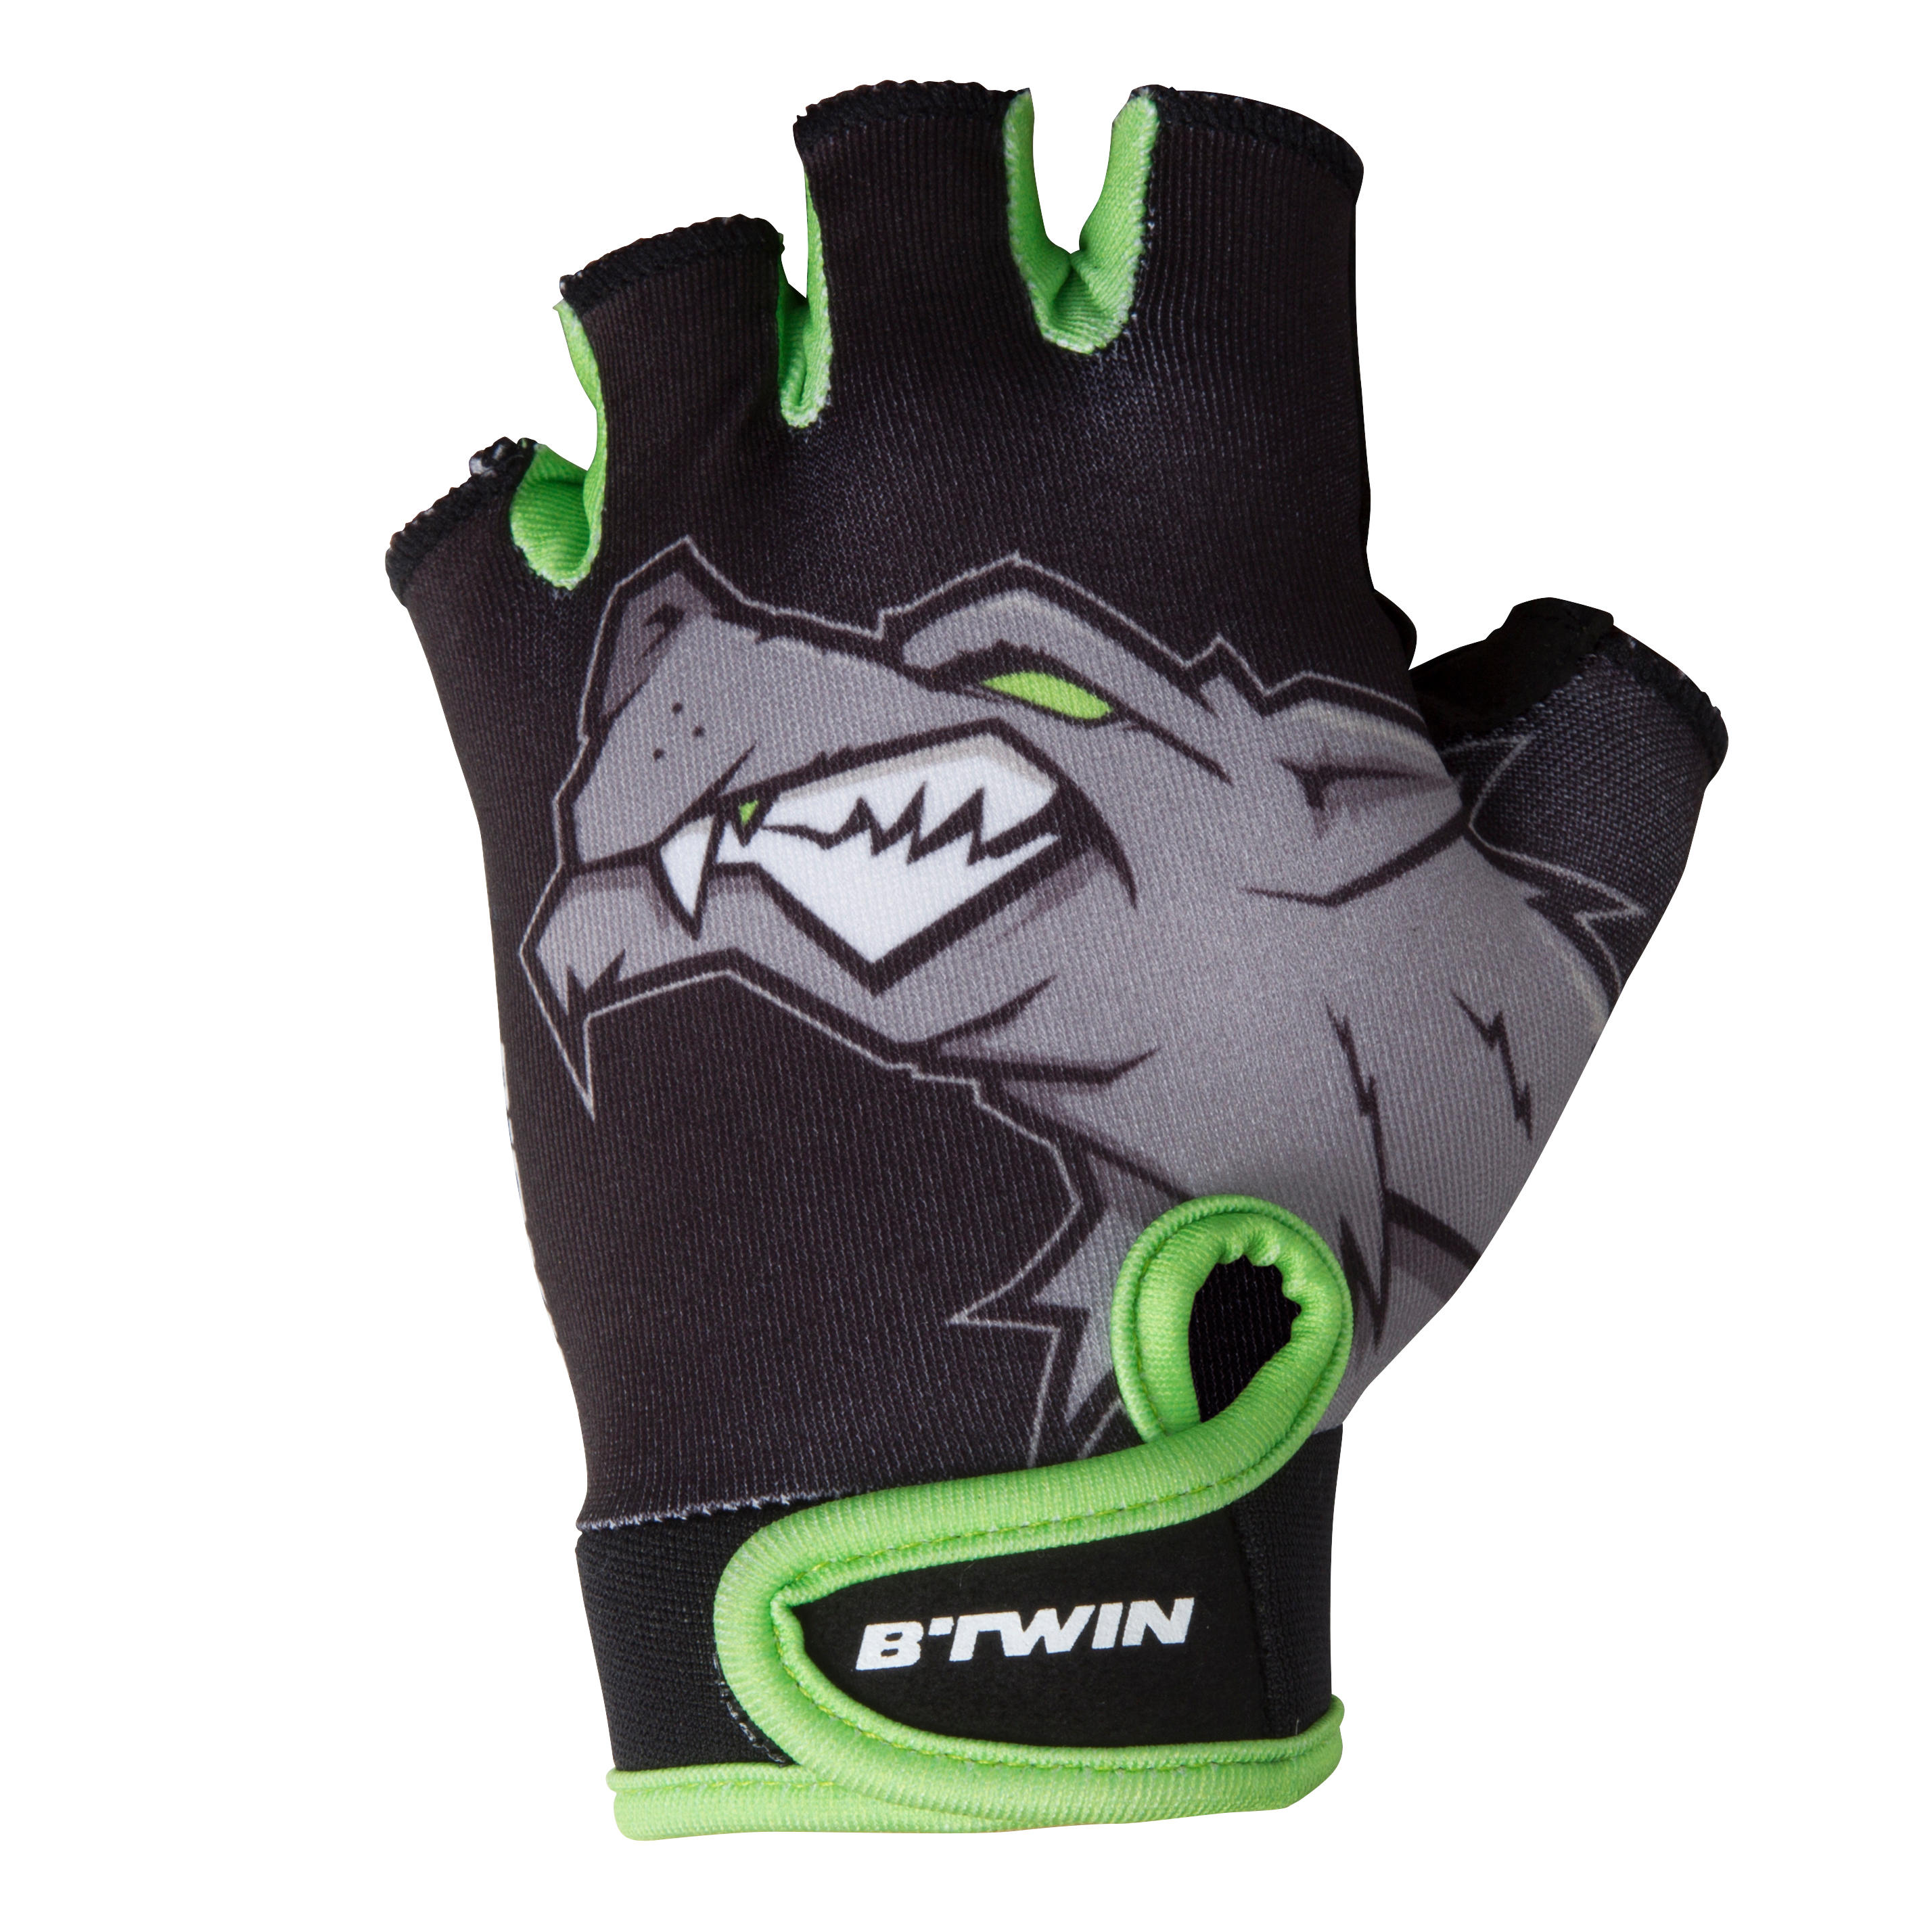 BTWIN Racingboy Kids' Gloves - Black